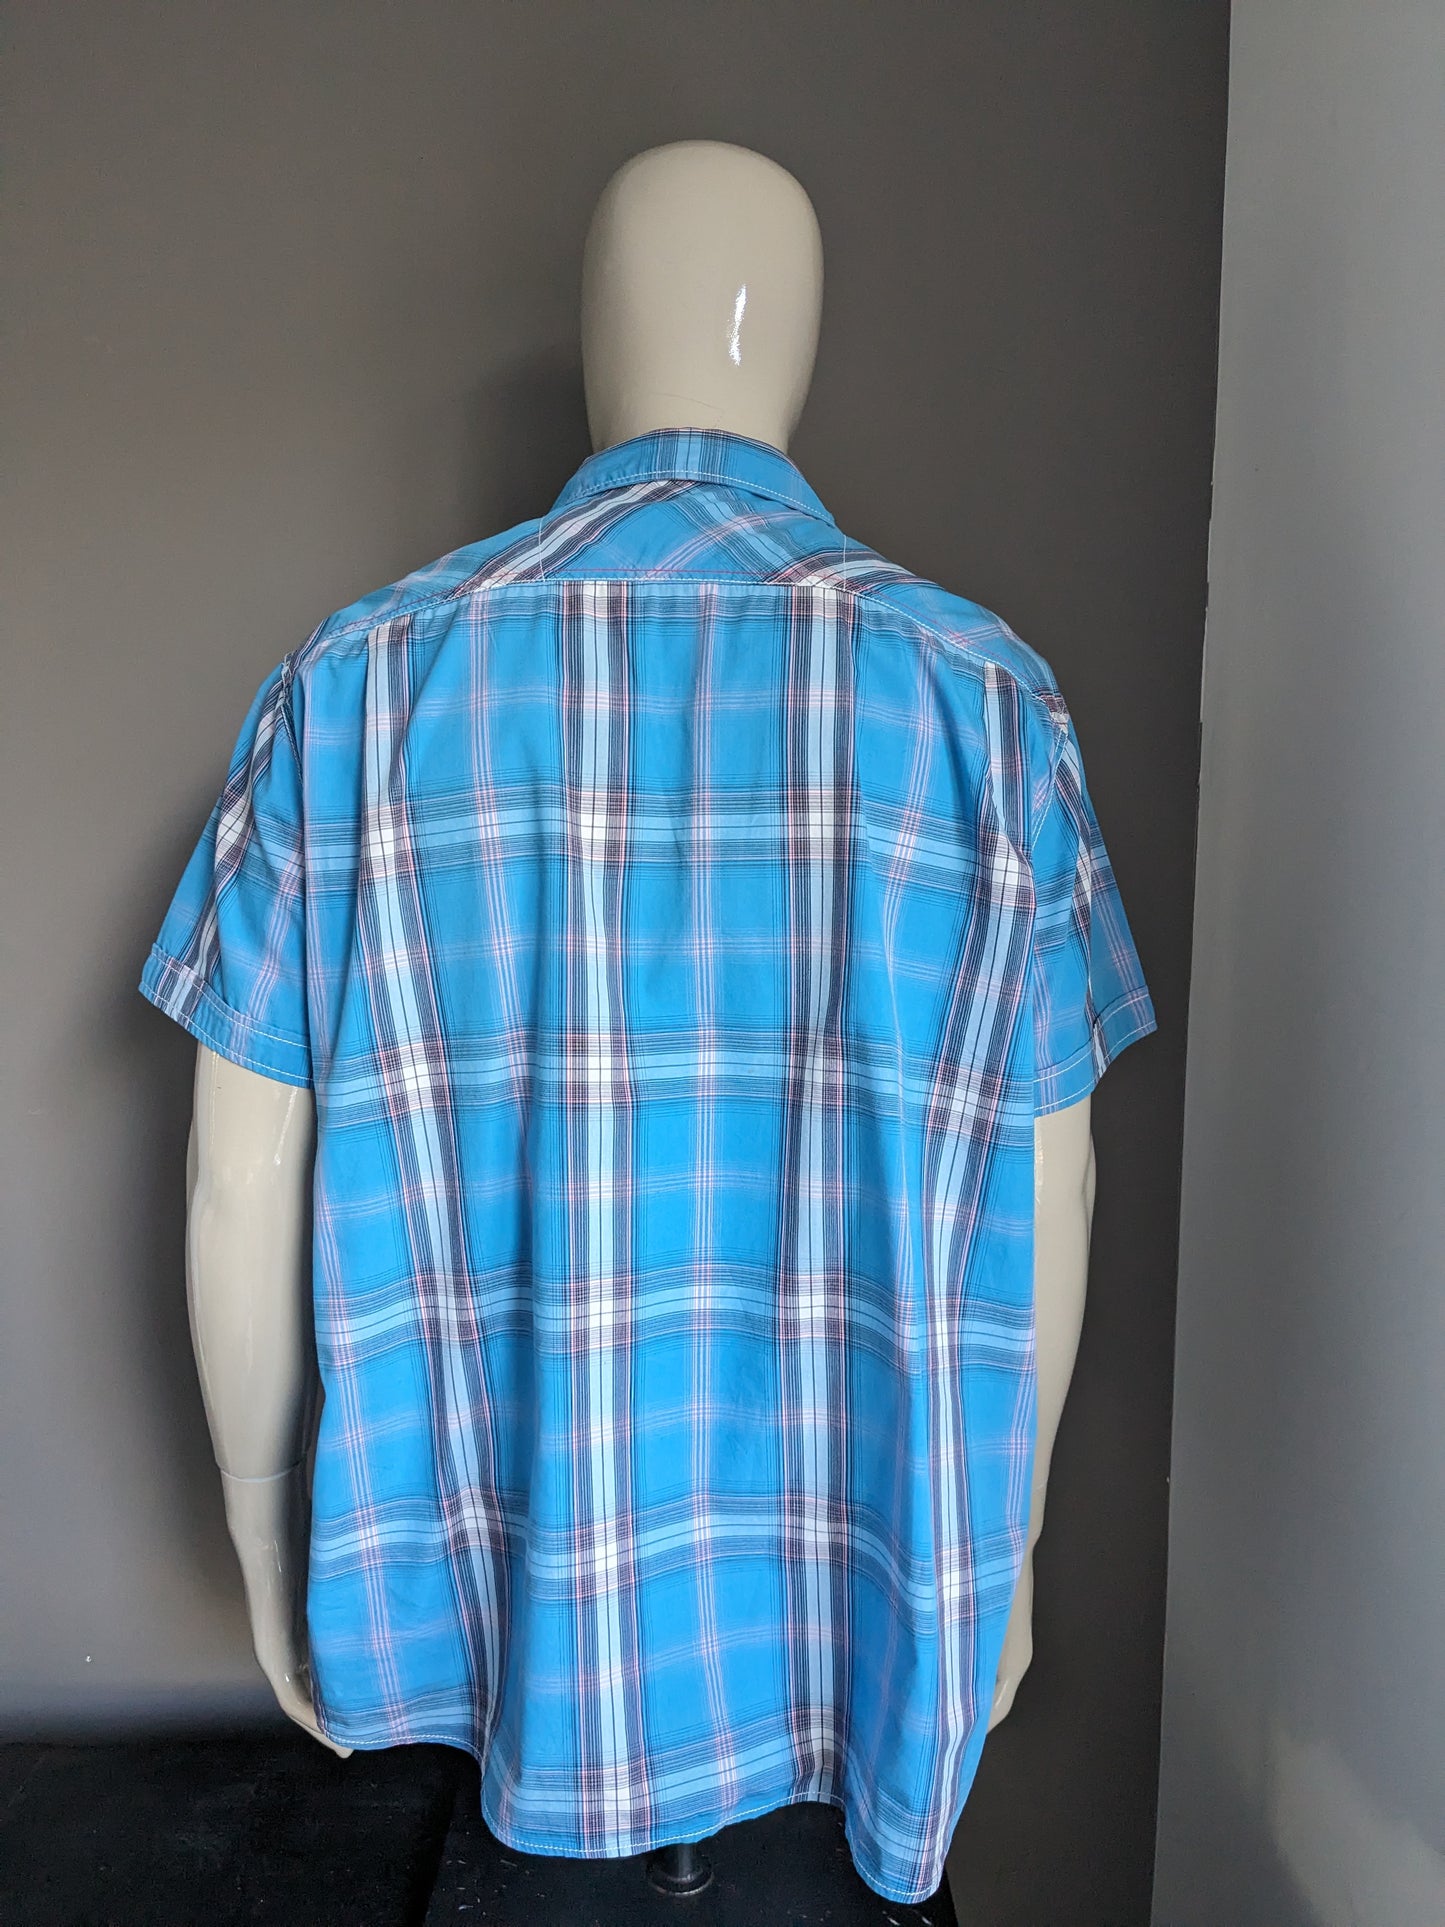 SHINLIFE Shirt Short Sleeve. Blue rose blanc à carreaux. Taille 4xl / xxxxl.